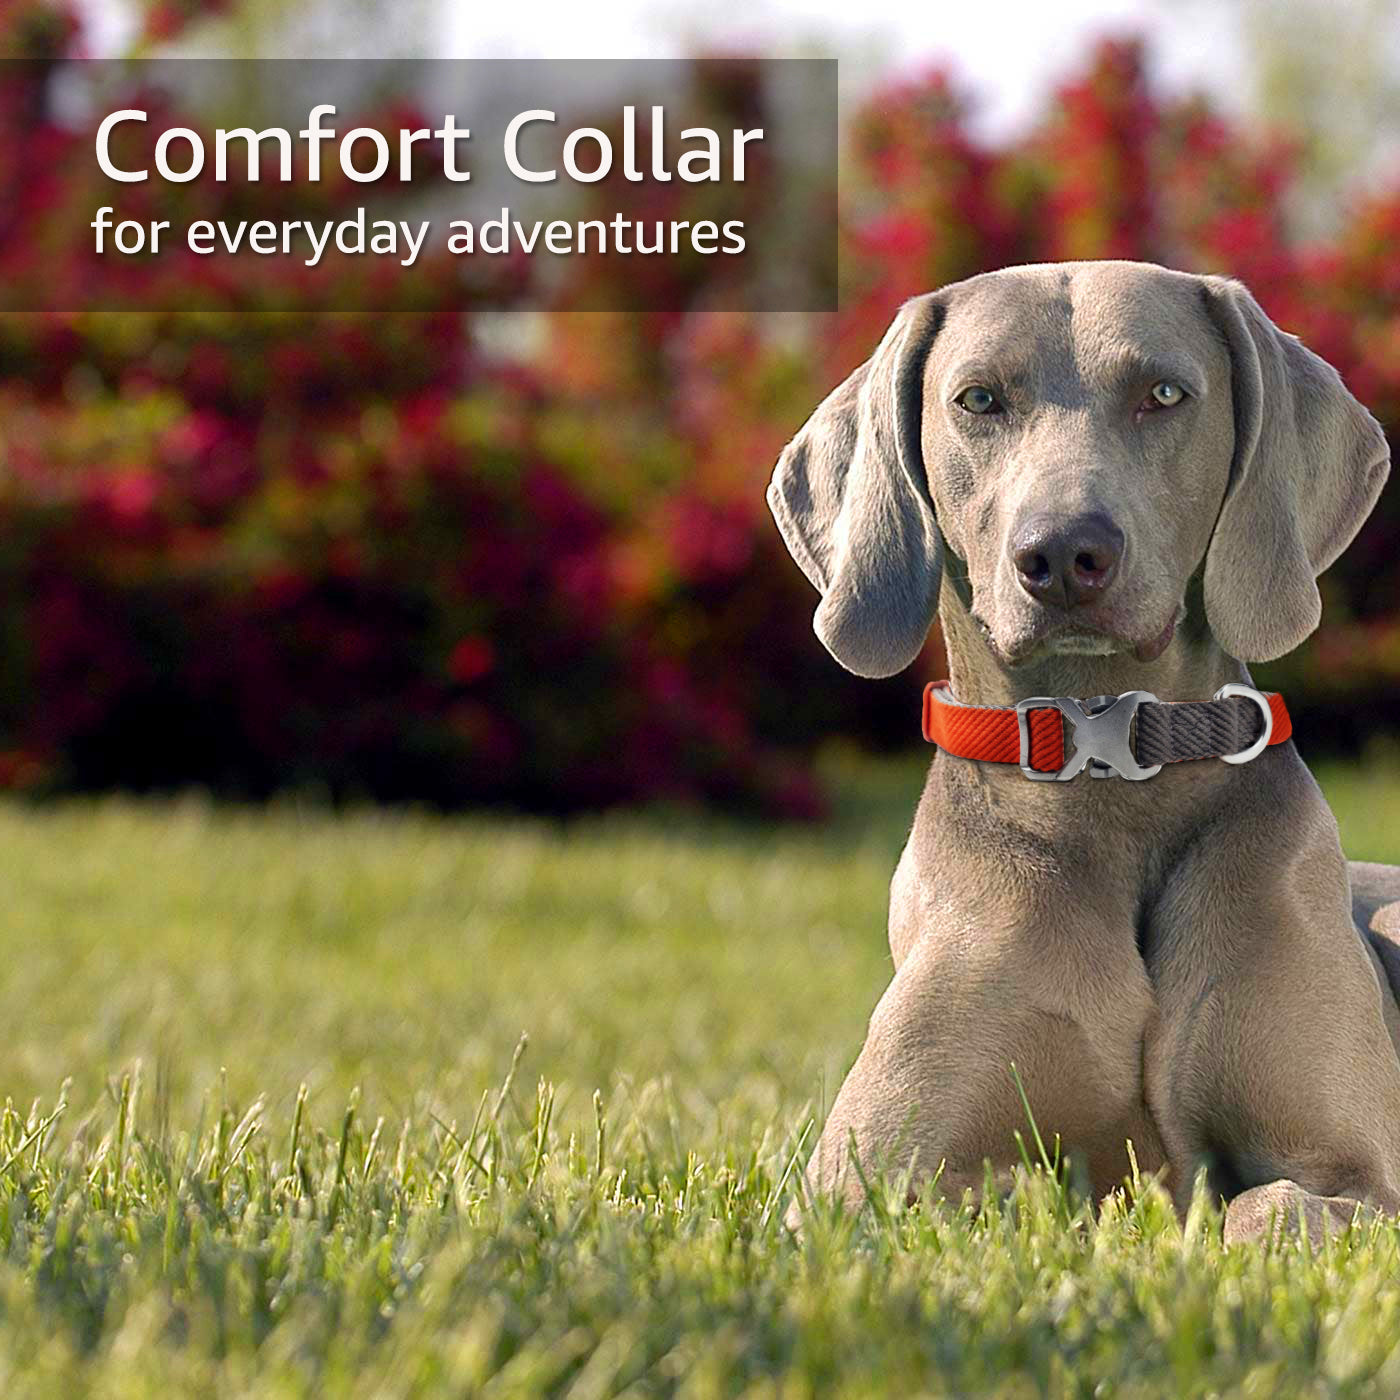 Comfort collar for everyday adventures 